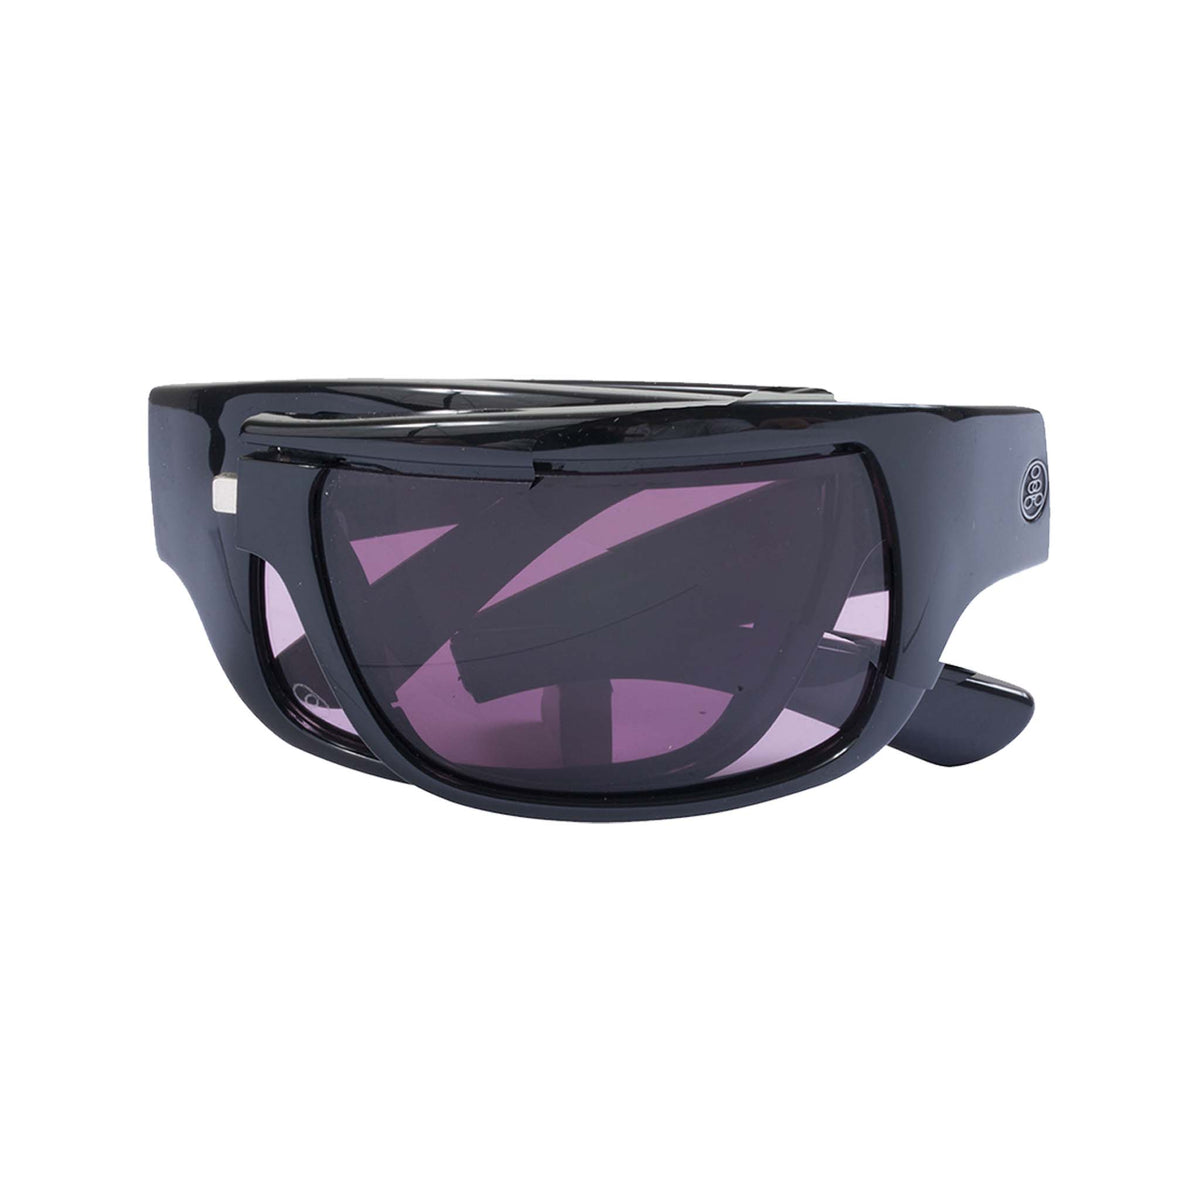 Popticals, Premium Compact Sunglasses, PopH2O, 200070-BGVS, Polarized Sunglasses, Gloss Black Frame, Violet Golf Lenses, Compact View